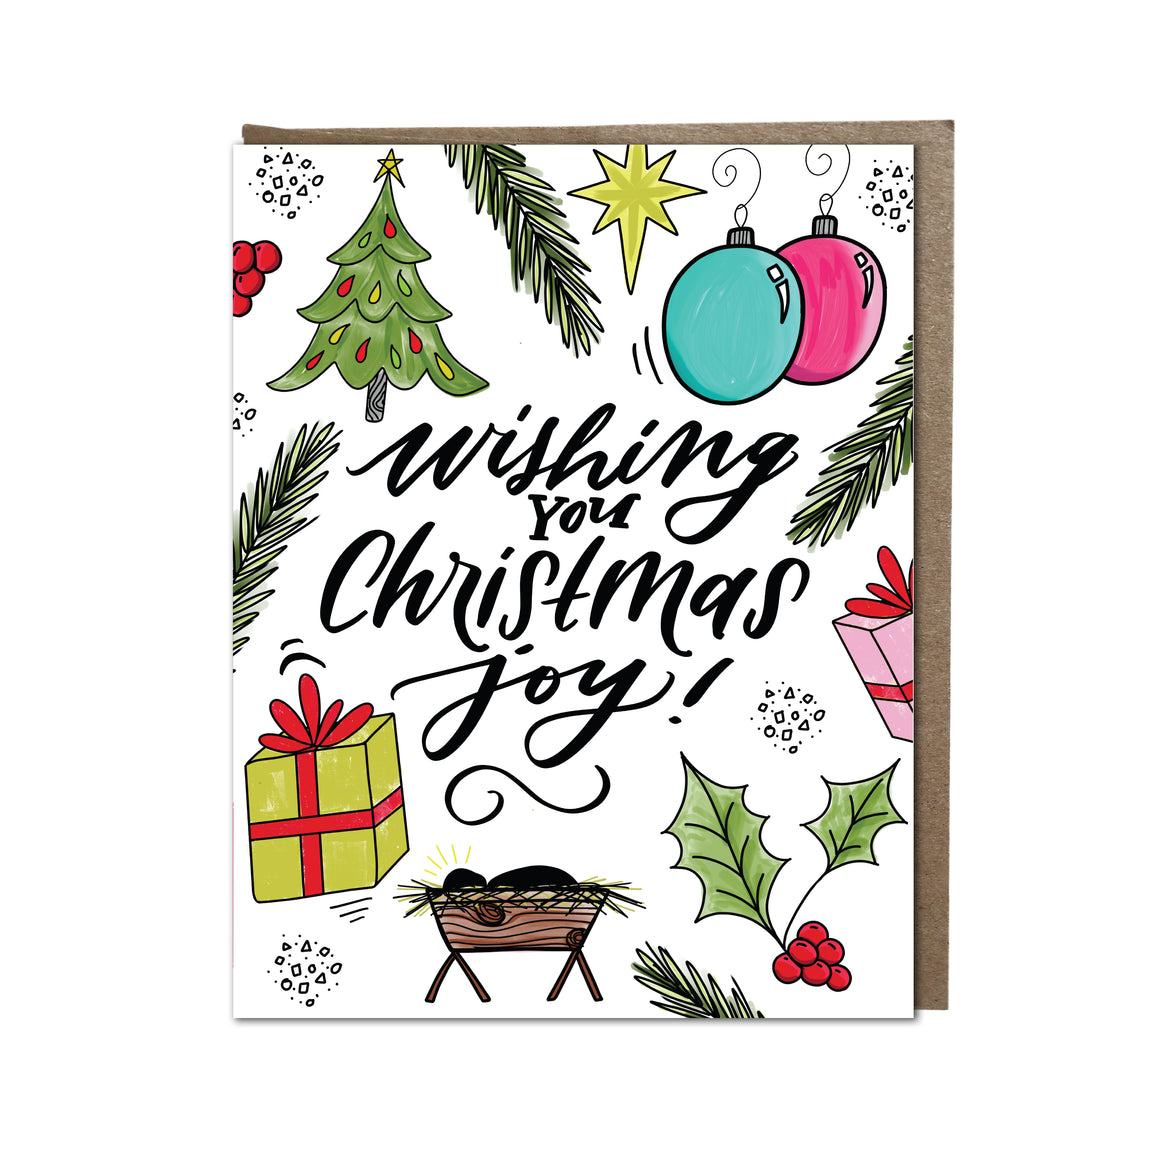 "Wishing You Christmas Joy" card